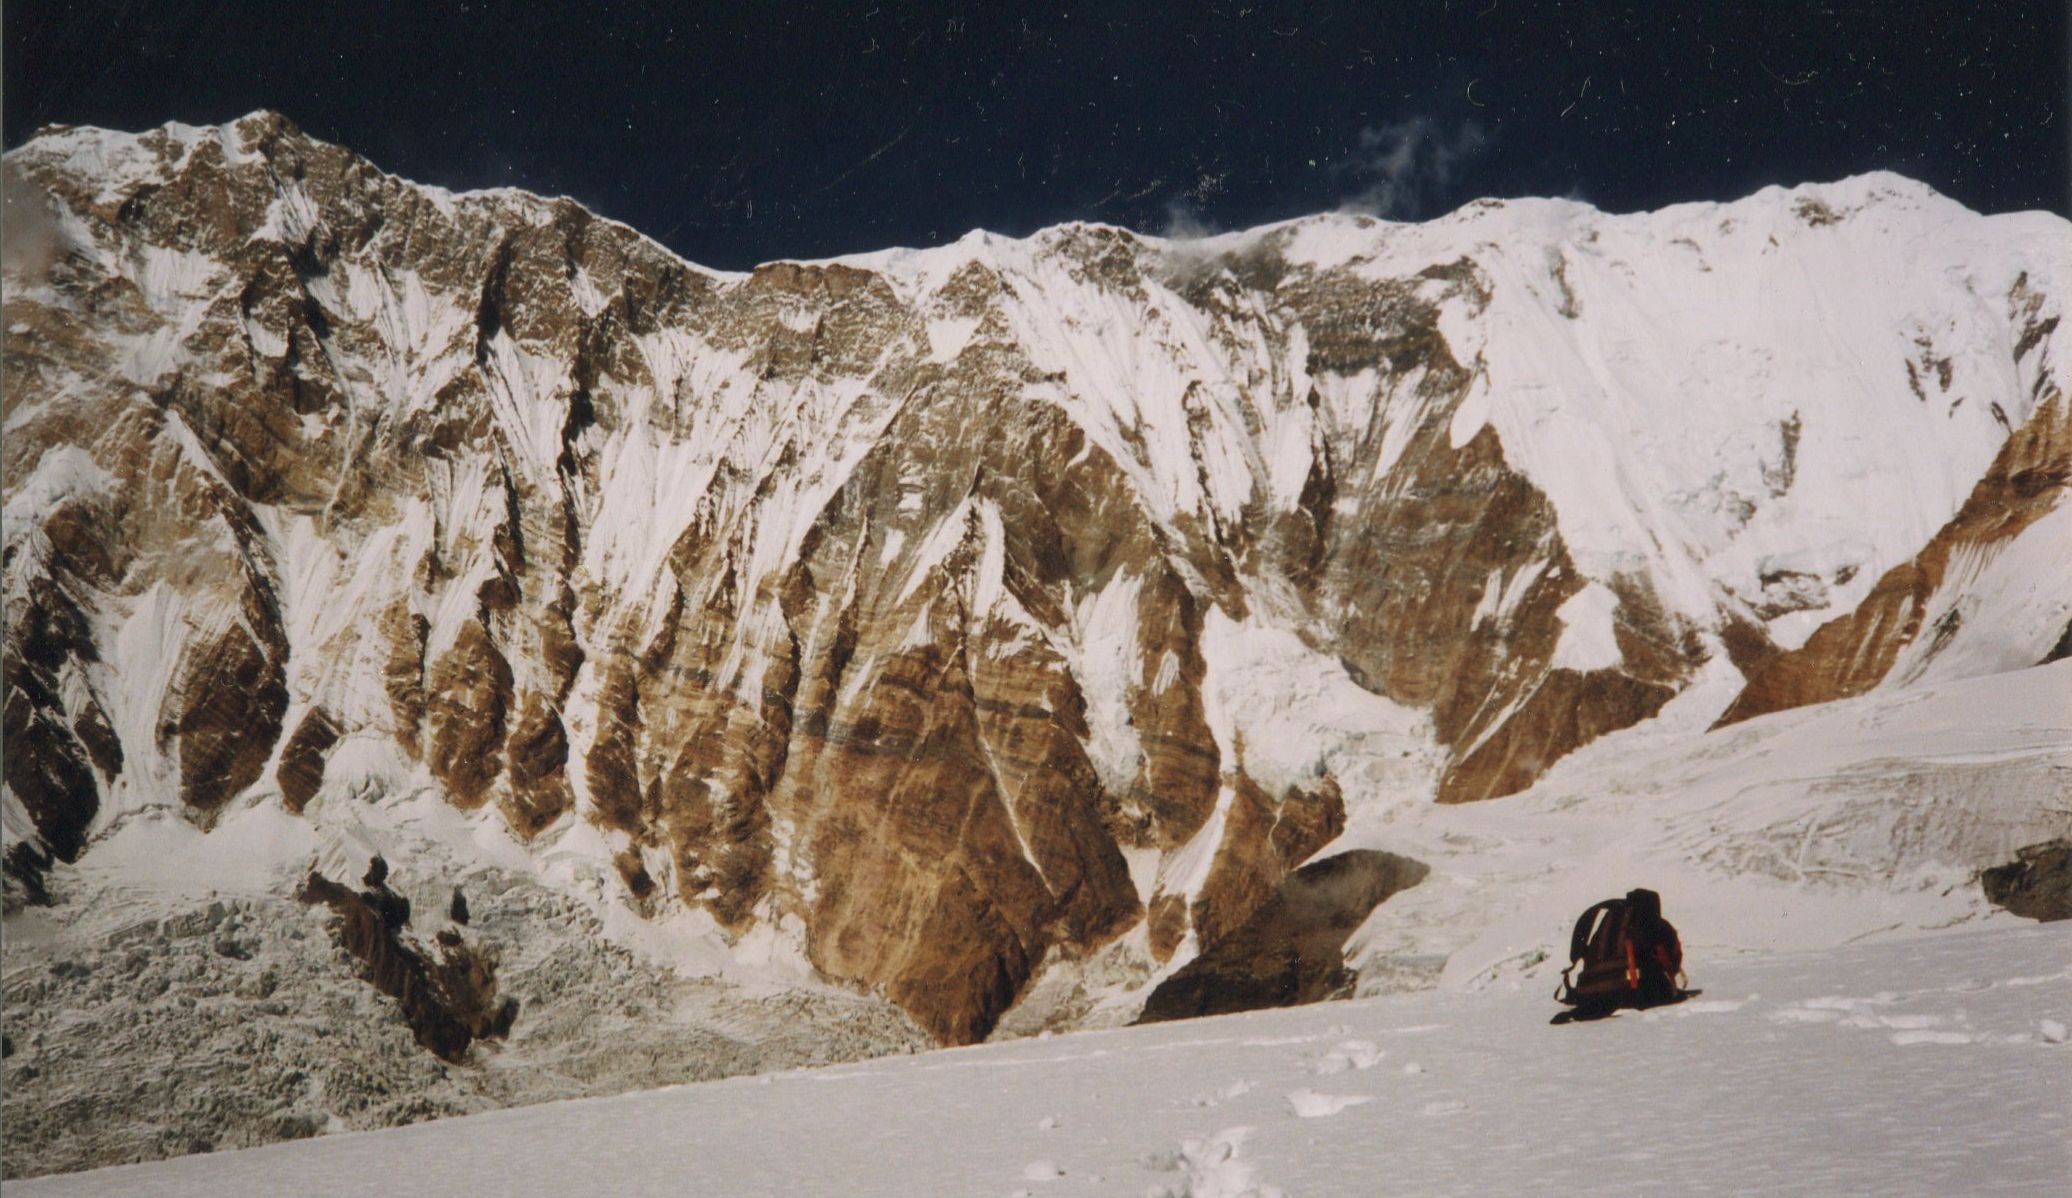 Mount Annapurna I from summit of Rakshi Peak